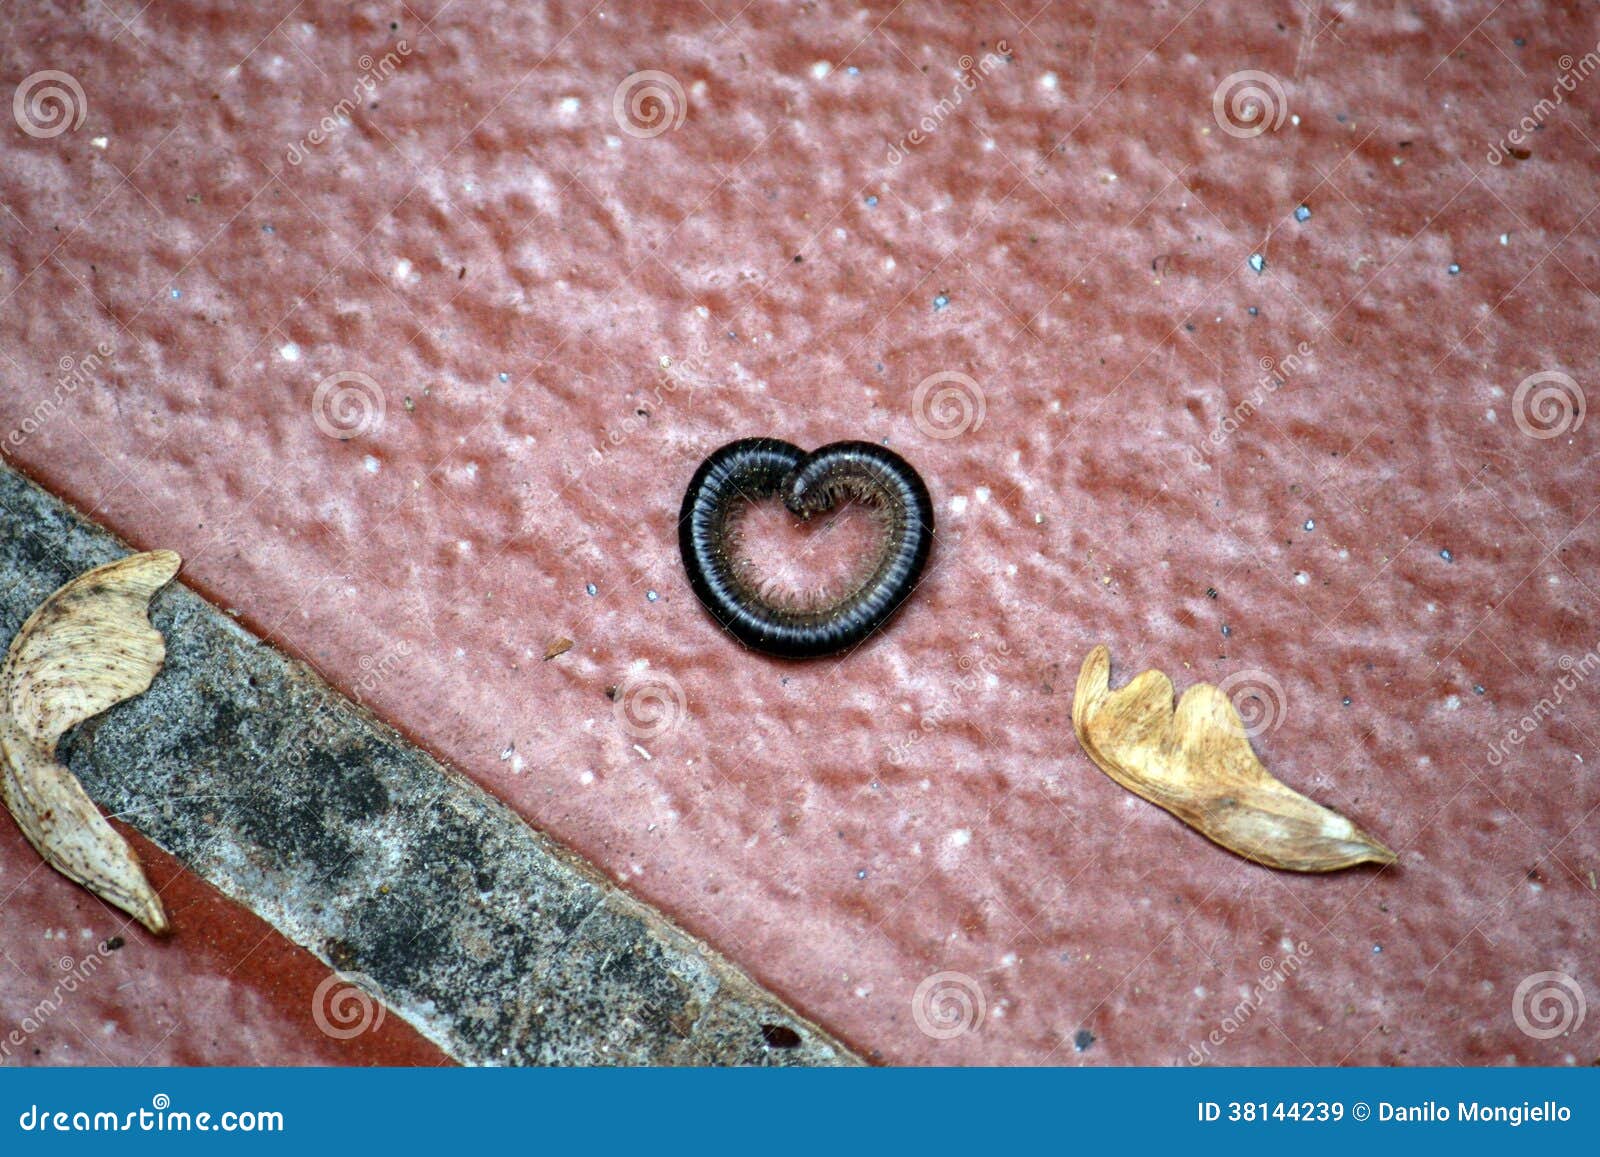 Heart worm stock image. Image of loving, shape, romantic - 38144239